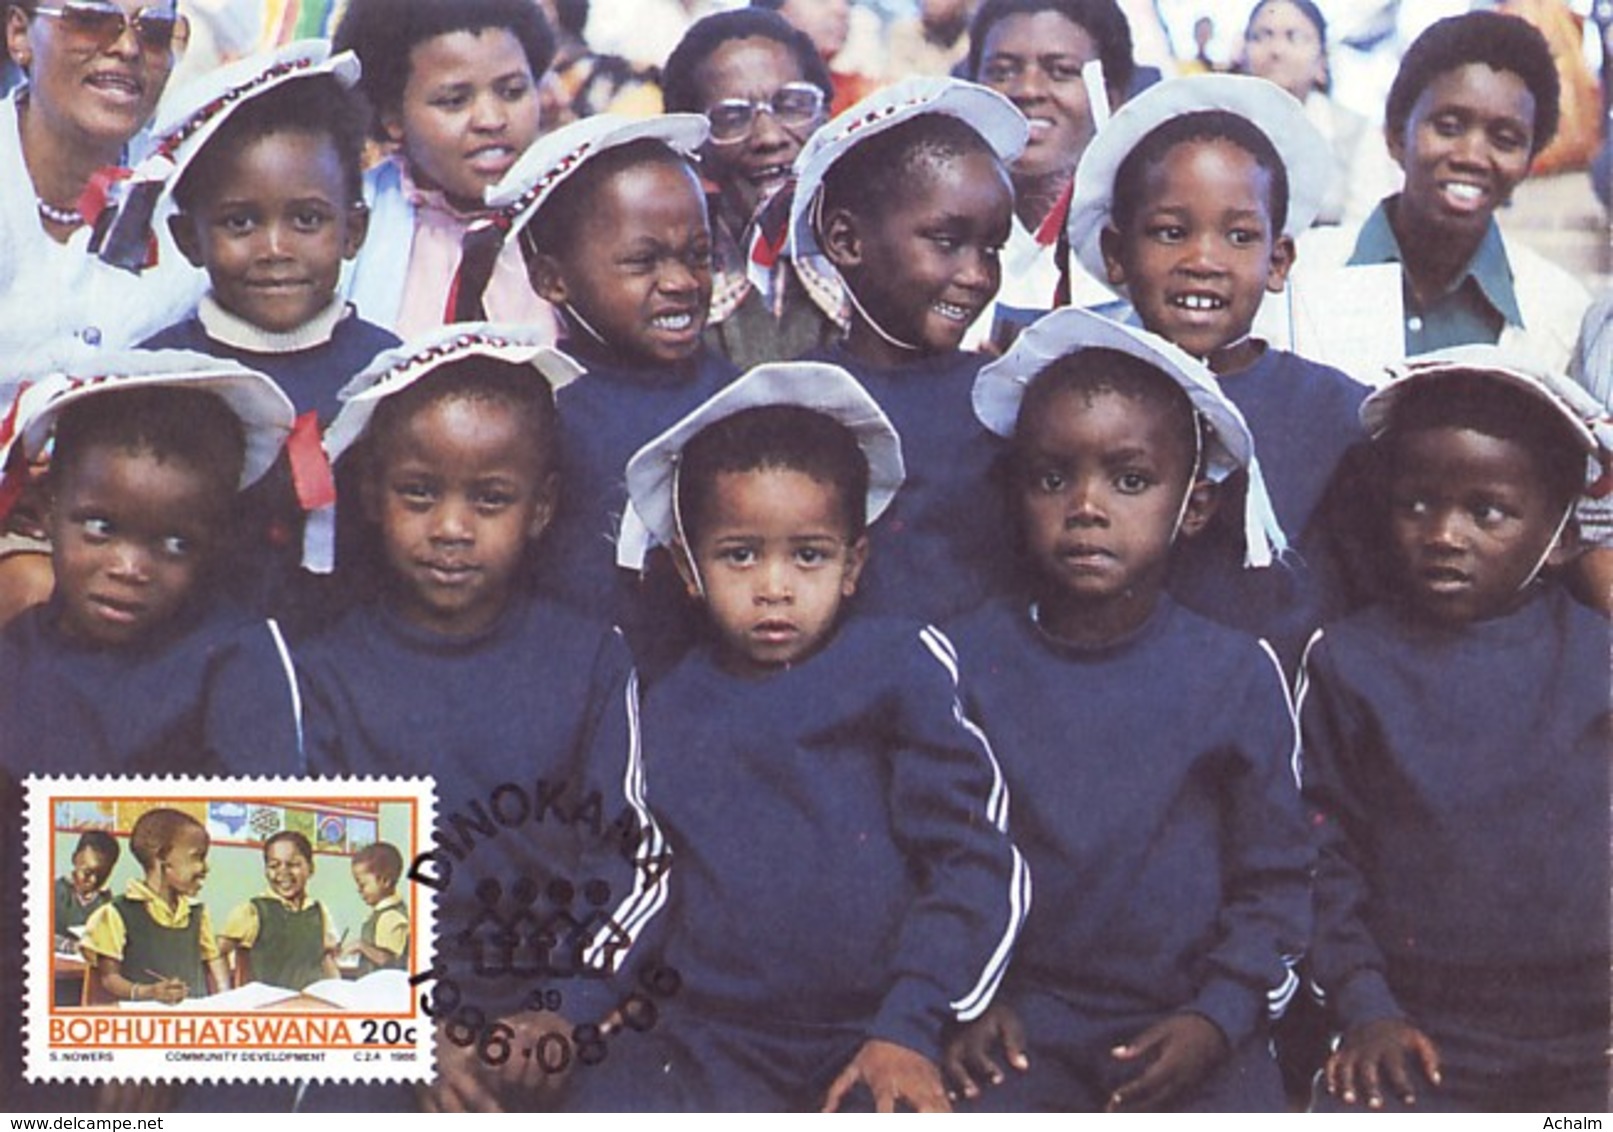 Bophuthatswana - Maximum Card Of 1986 - MiNr. 174 - Agricultural Development Project - Children In School - Bophuthatswana